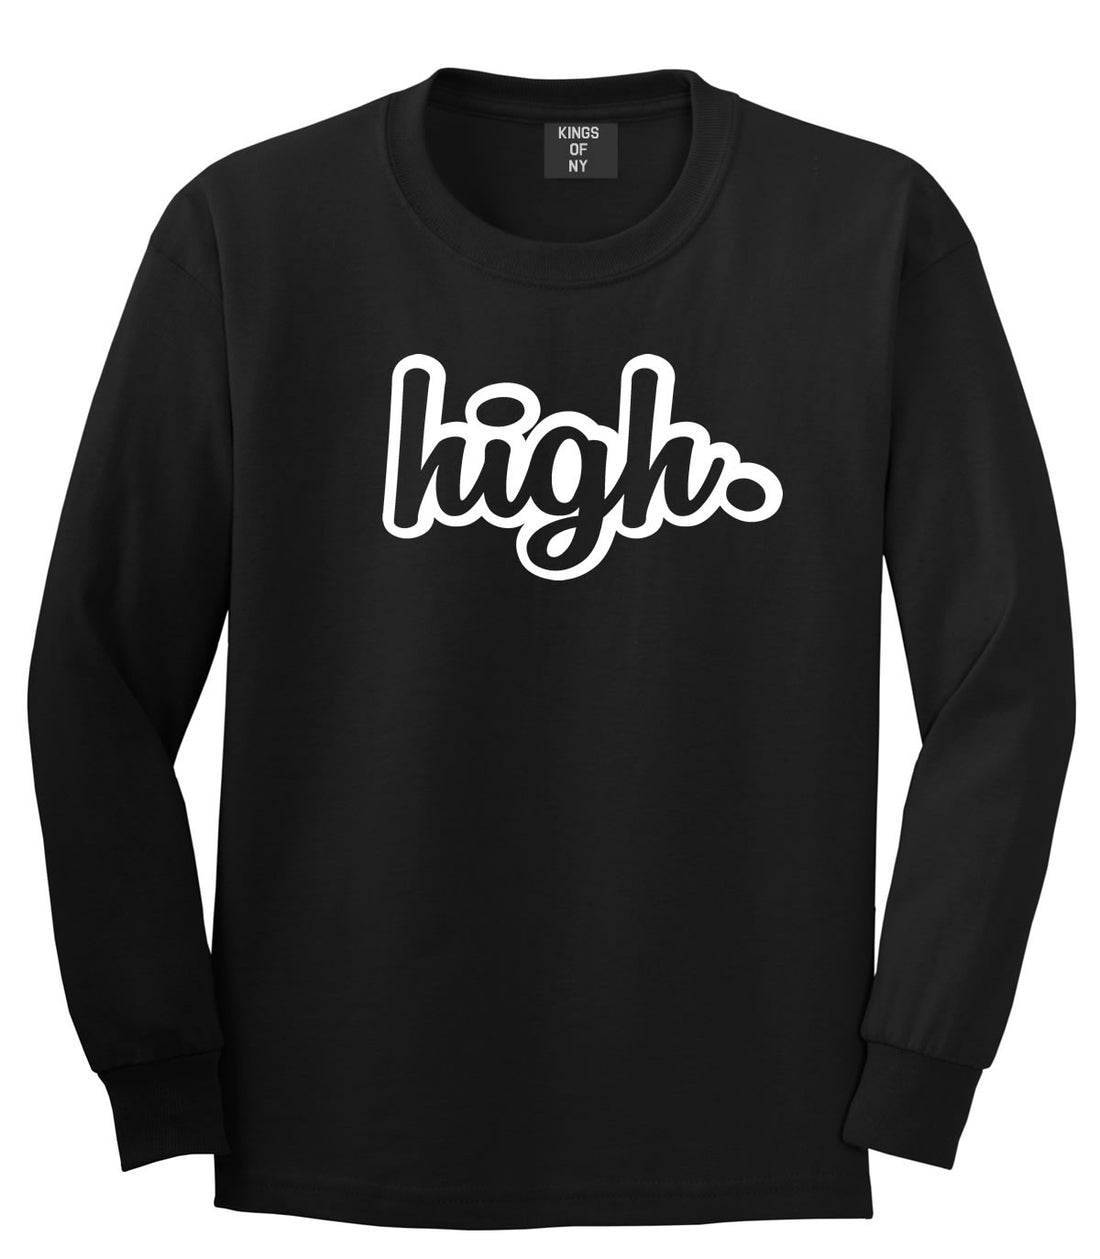 High Weed Faded Dap Smoke Marijuana Long Sleeve T-Shirt In Black by Kings Of NY